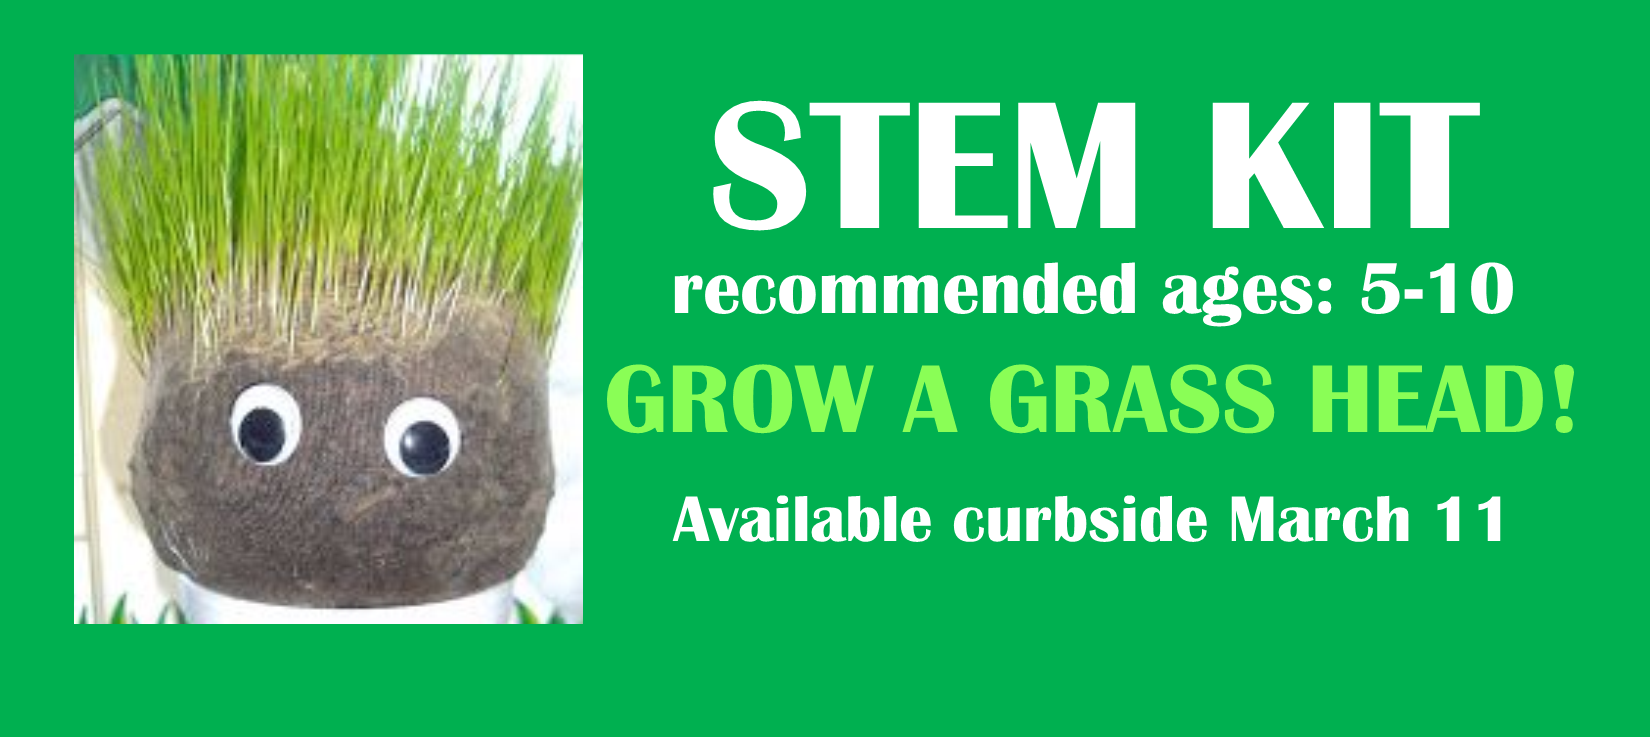 grass head STEM kit image